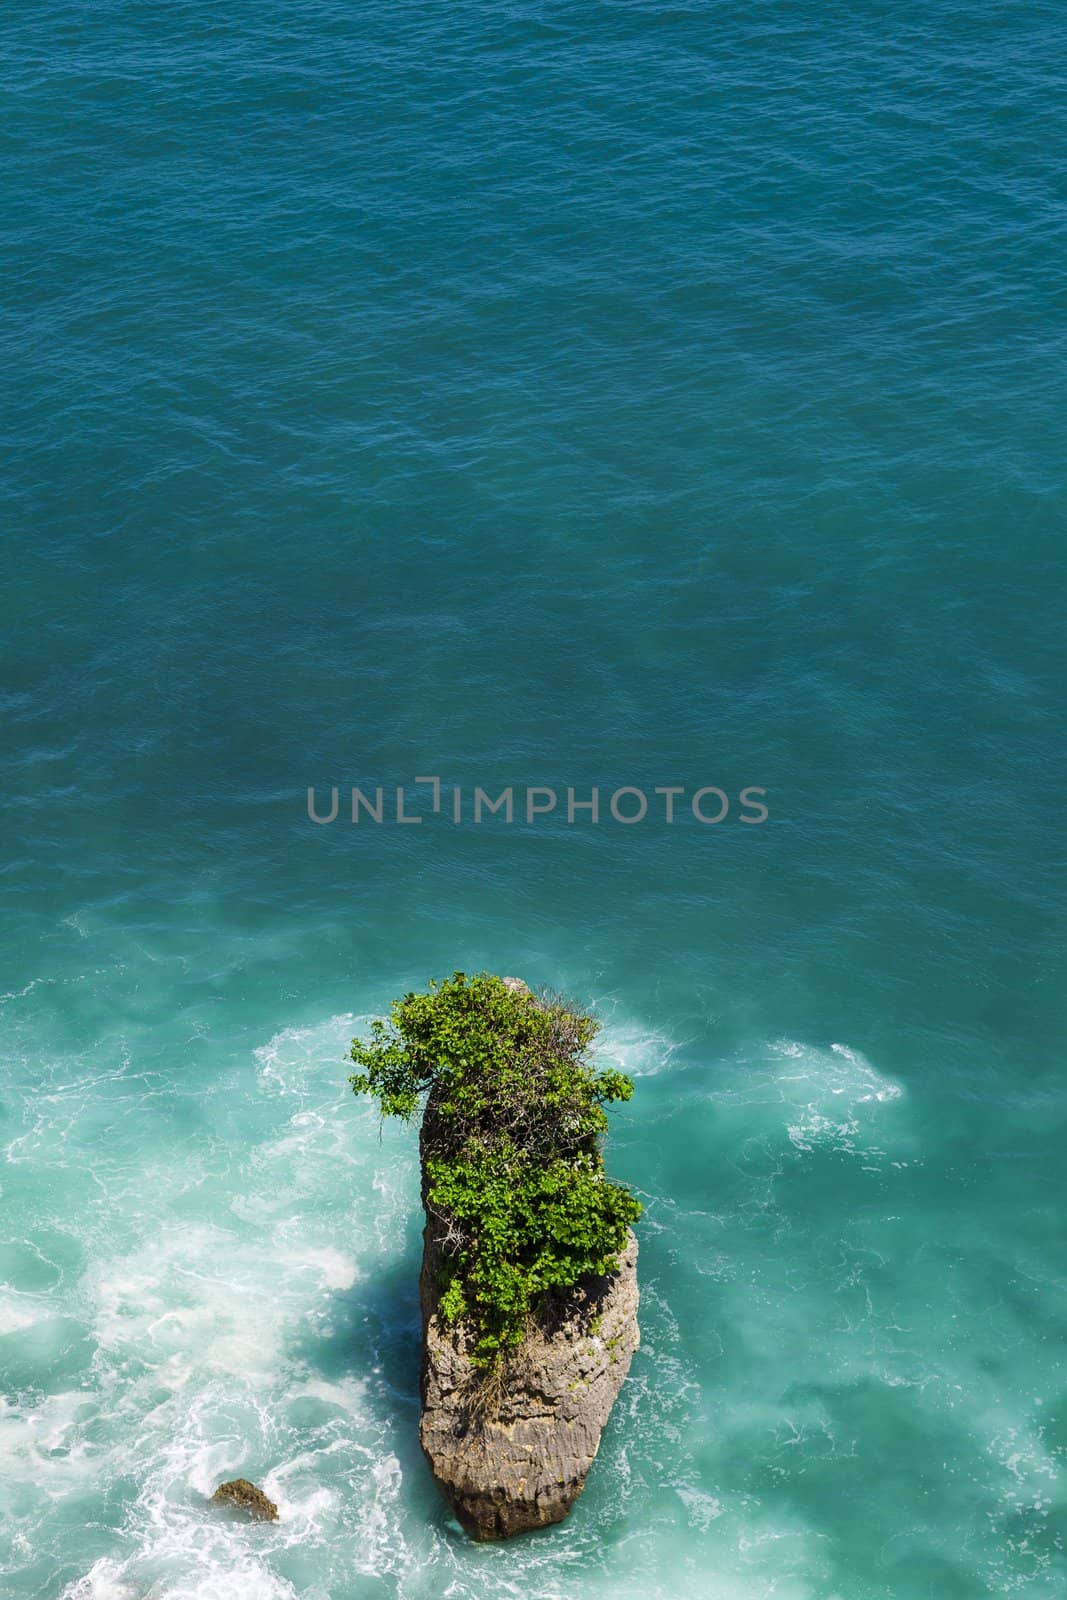 Rock sea and wave at Pura Uluwatu temple, Bali, Indonesia